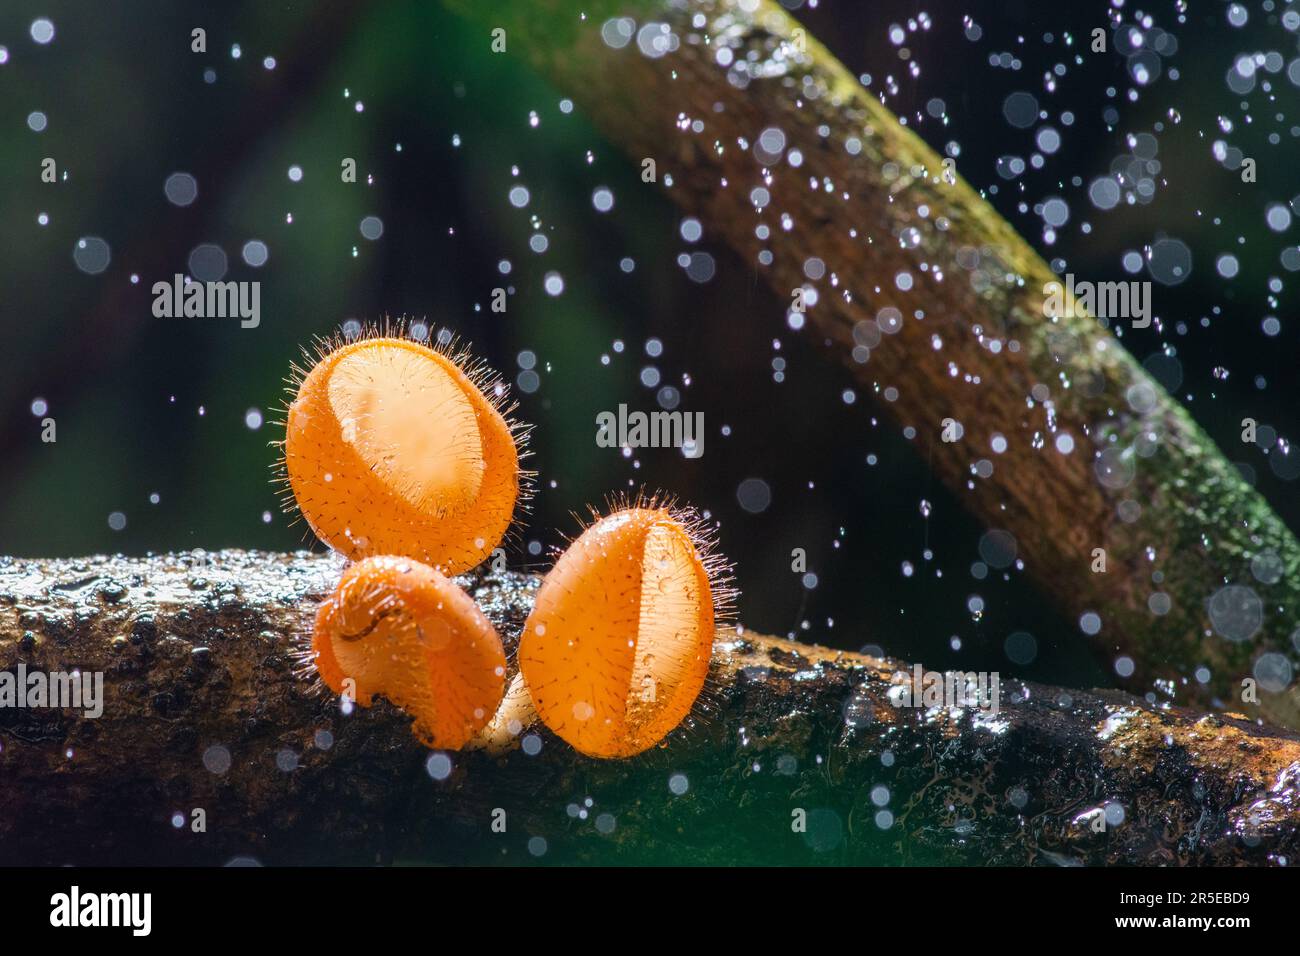 Beautiful harirymushrooms on wood in rain drops in rainy forest Stock Photo